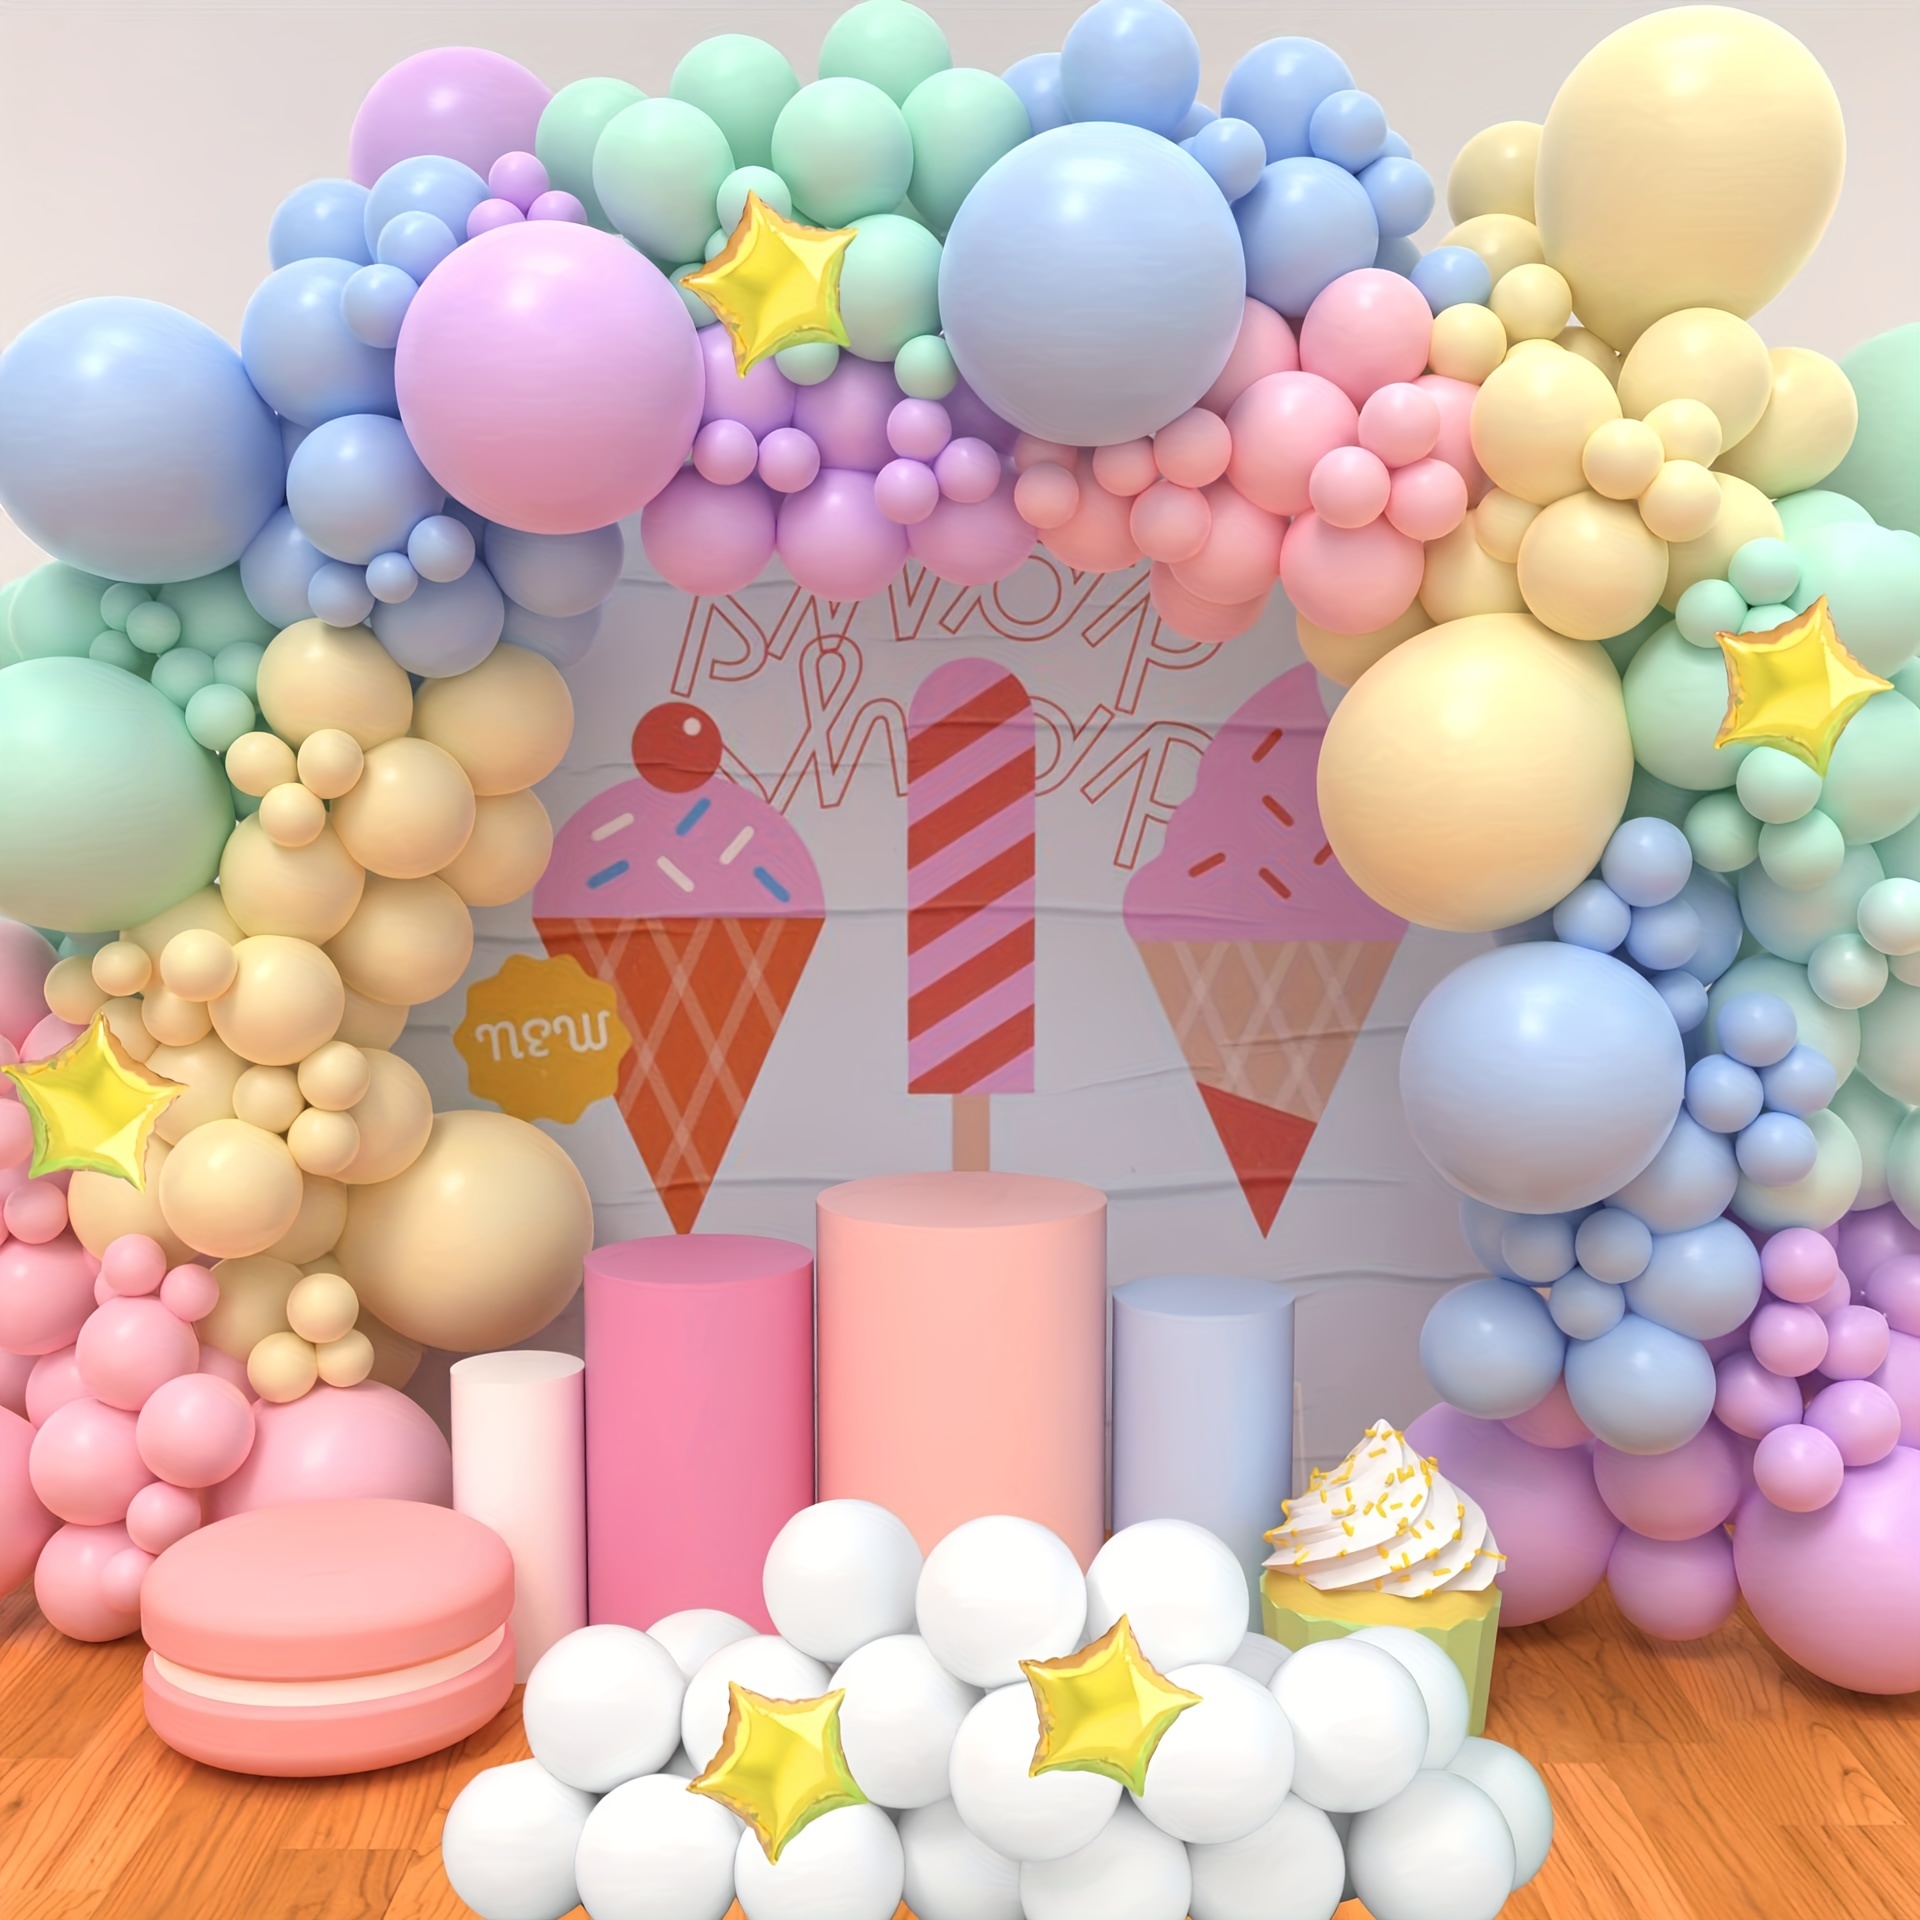 Specool Pastel Balloon Arch Kit, Balloon Garland Rainbow Party Decorations, Macaron Birthday Decorations for Girls Baby Shower, Stars Rainbow Birthday